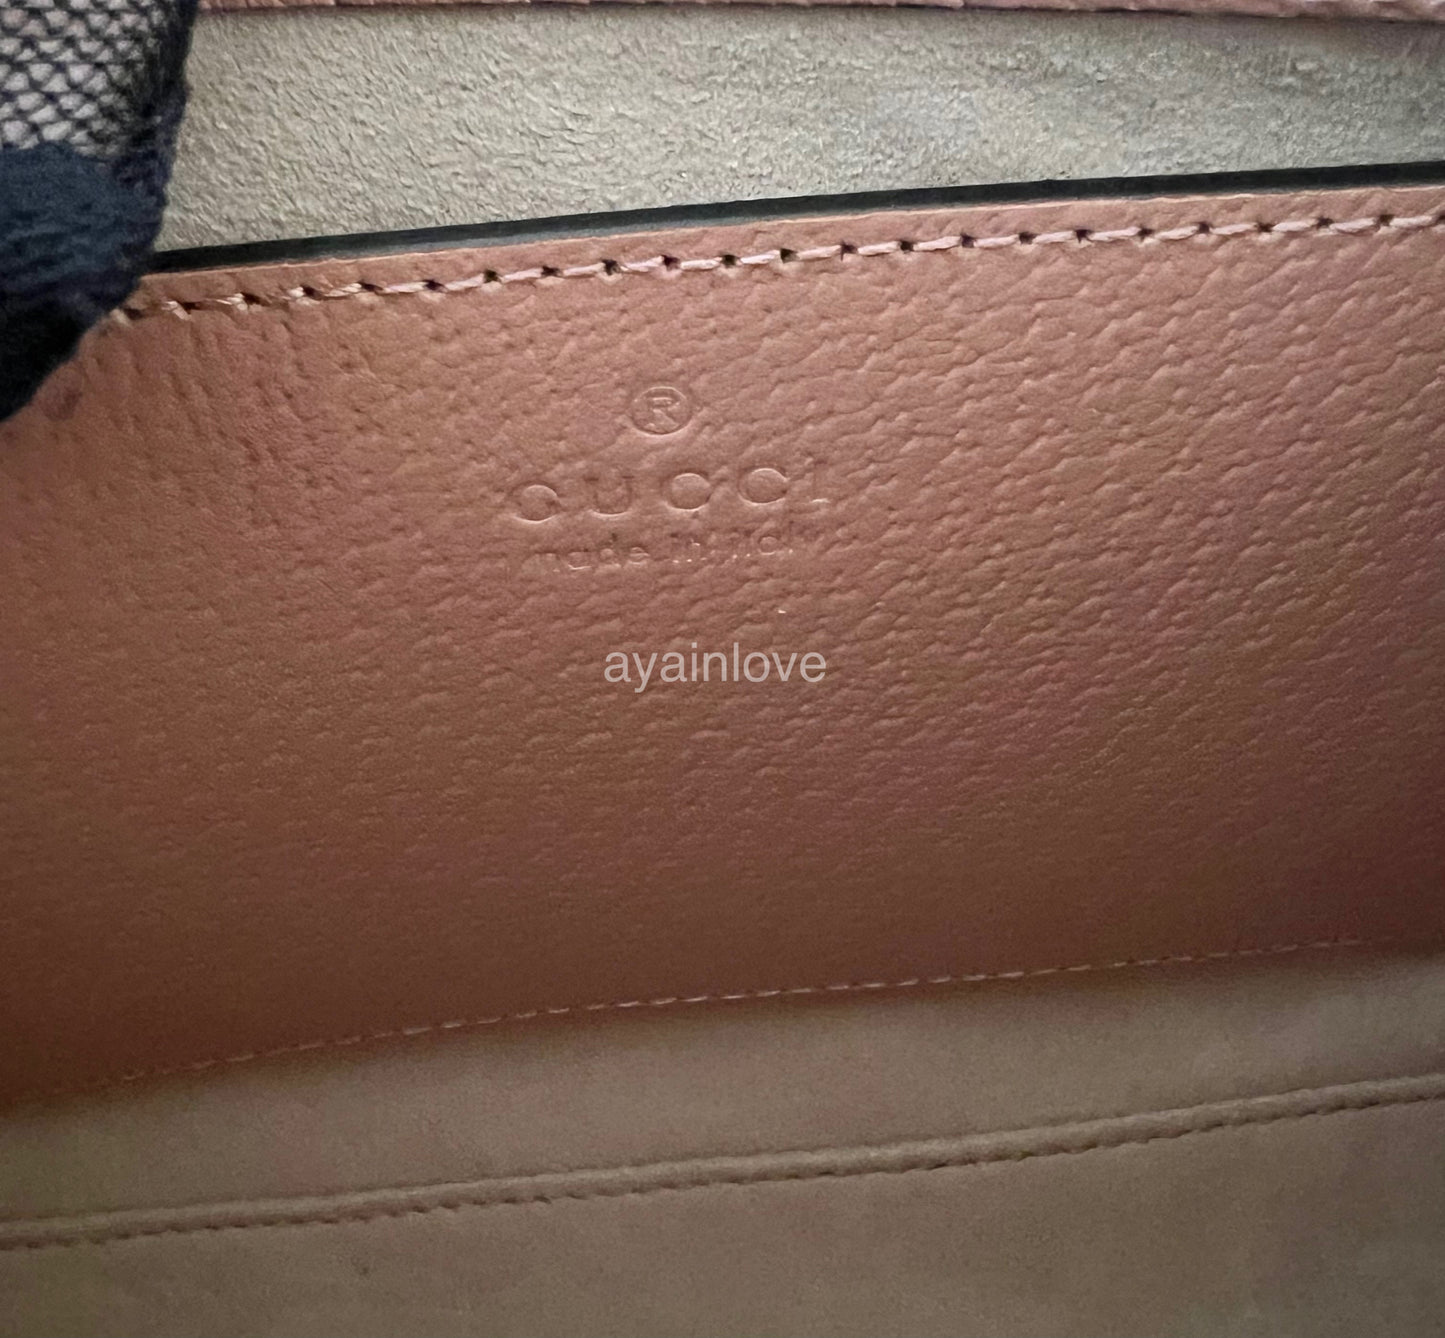 Gucci Ophidia Pink Small Shoulder Bag Rose Gold Hardware